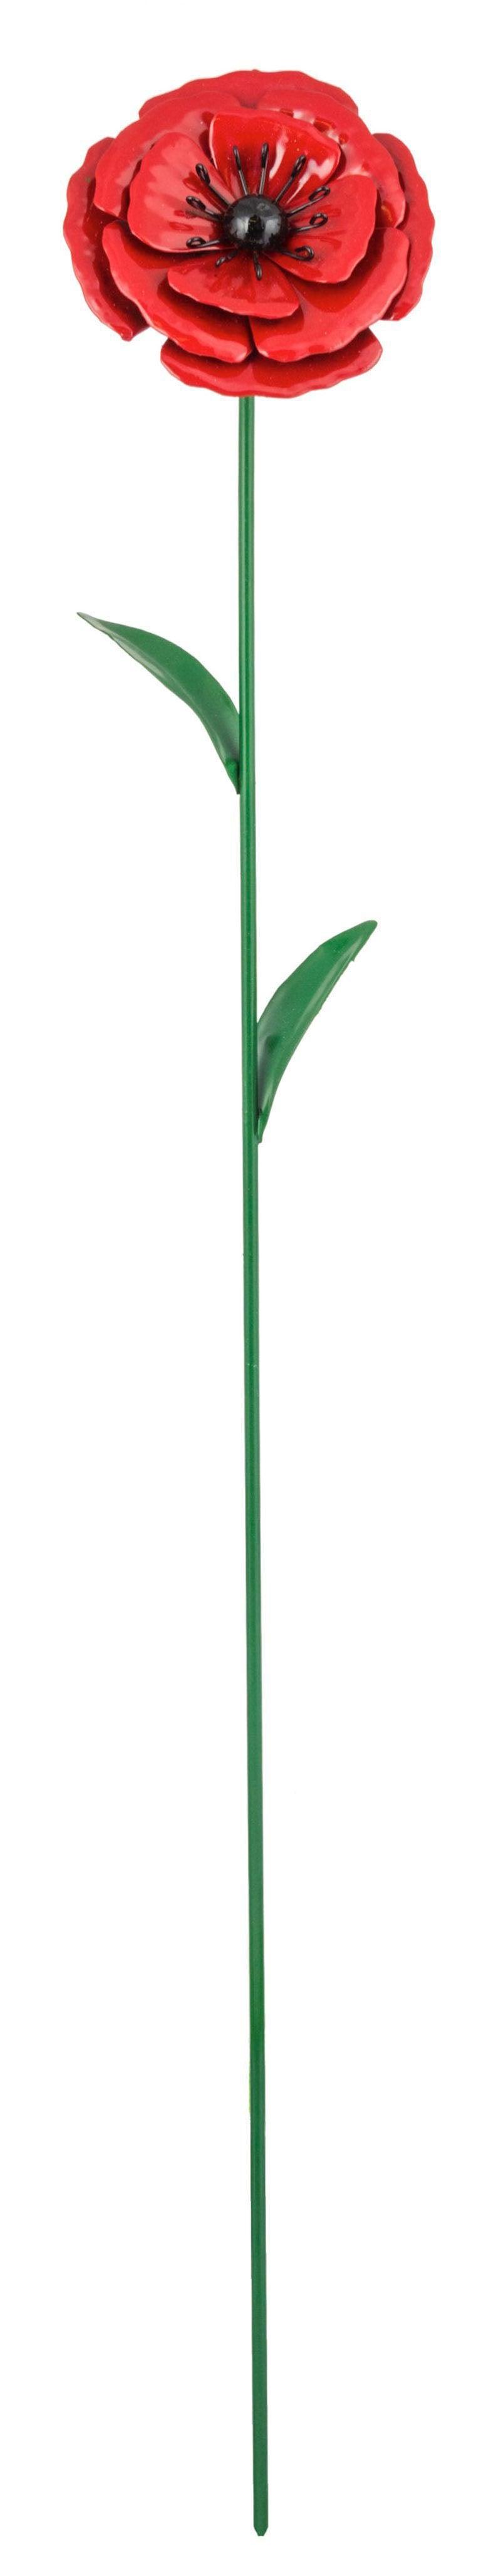 Poppy Flower Mini Stake - Towsure